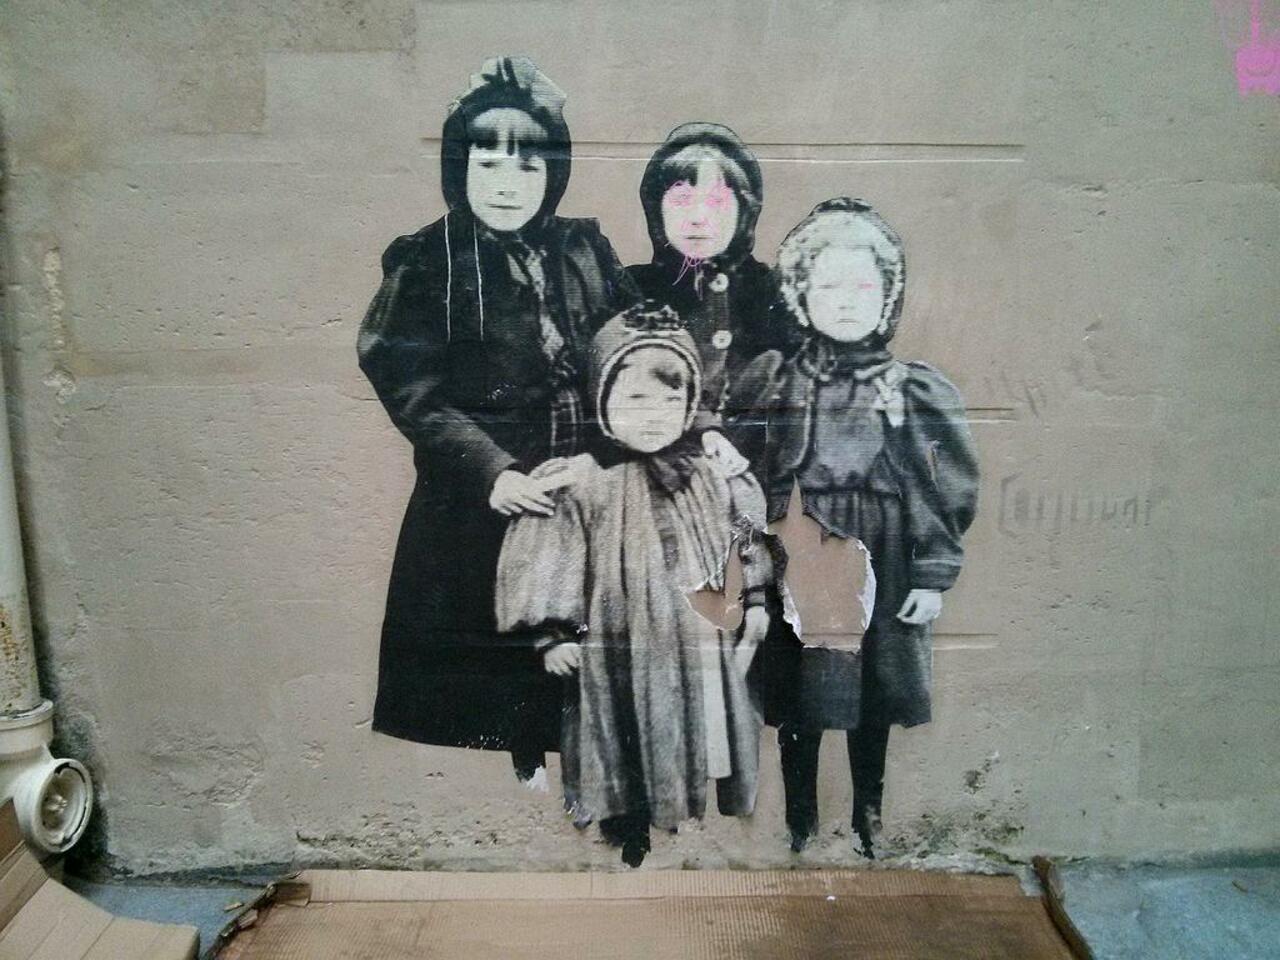 Street Art by Leo & Pipo in #Paris-2E-Arrondissement http://www.urbacolors.com #art #mural #graffiti #streetart http://t.co/1iKyexfKUm